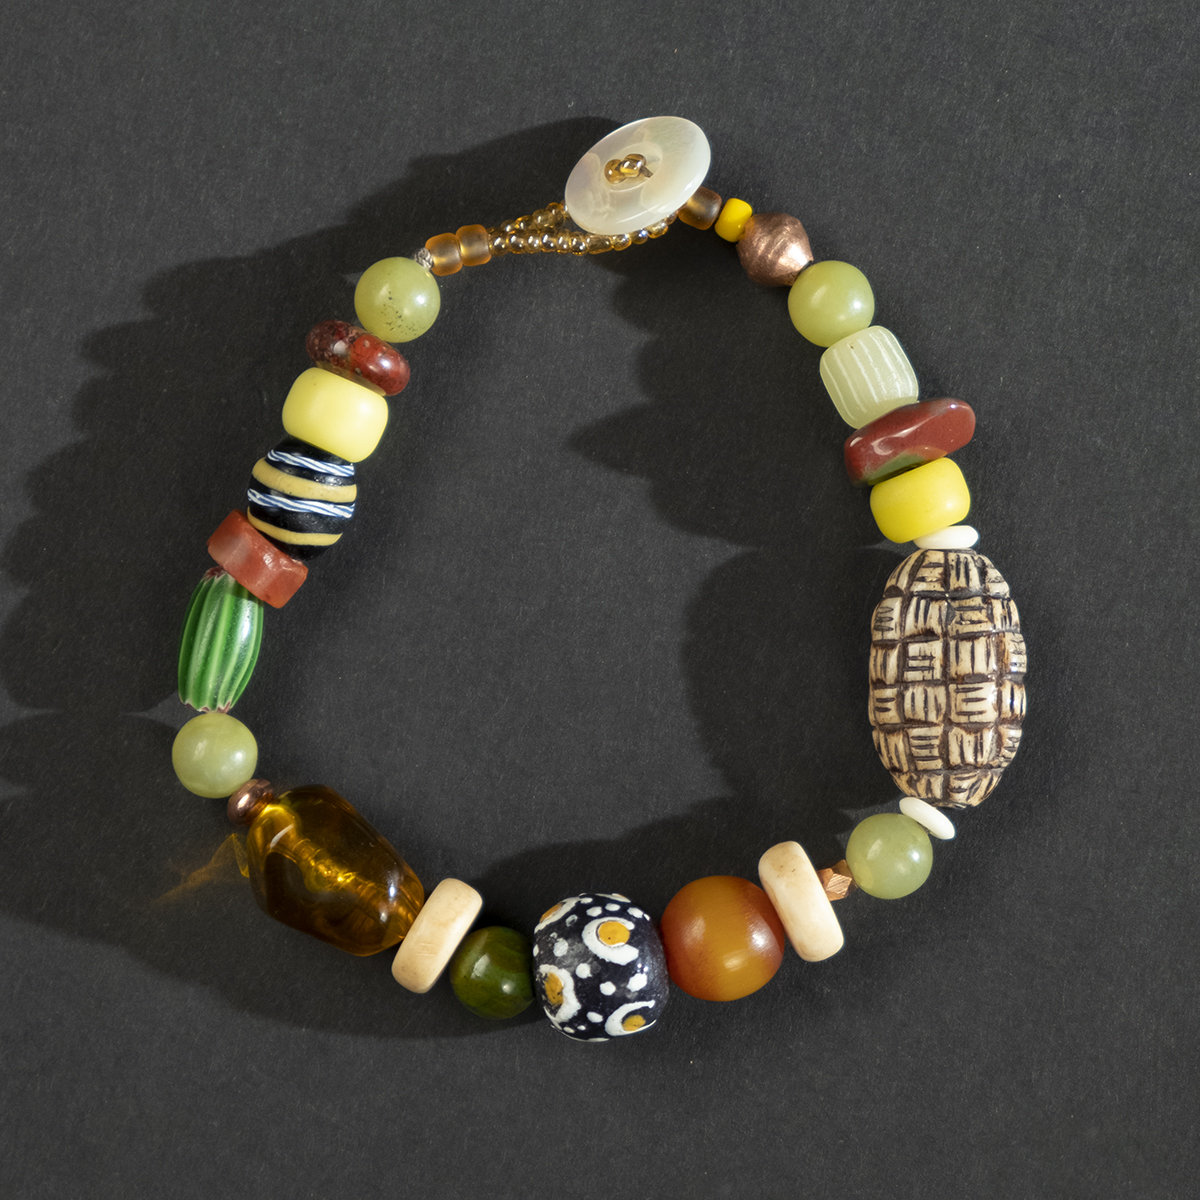 white Buddha juju trade bead bracelet with rare ancient bronze coin